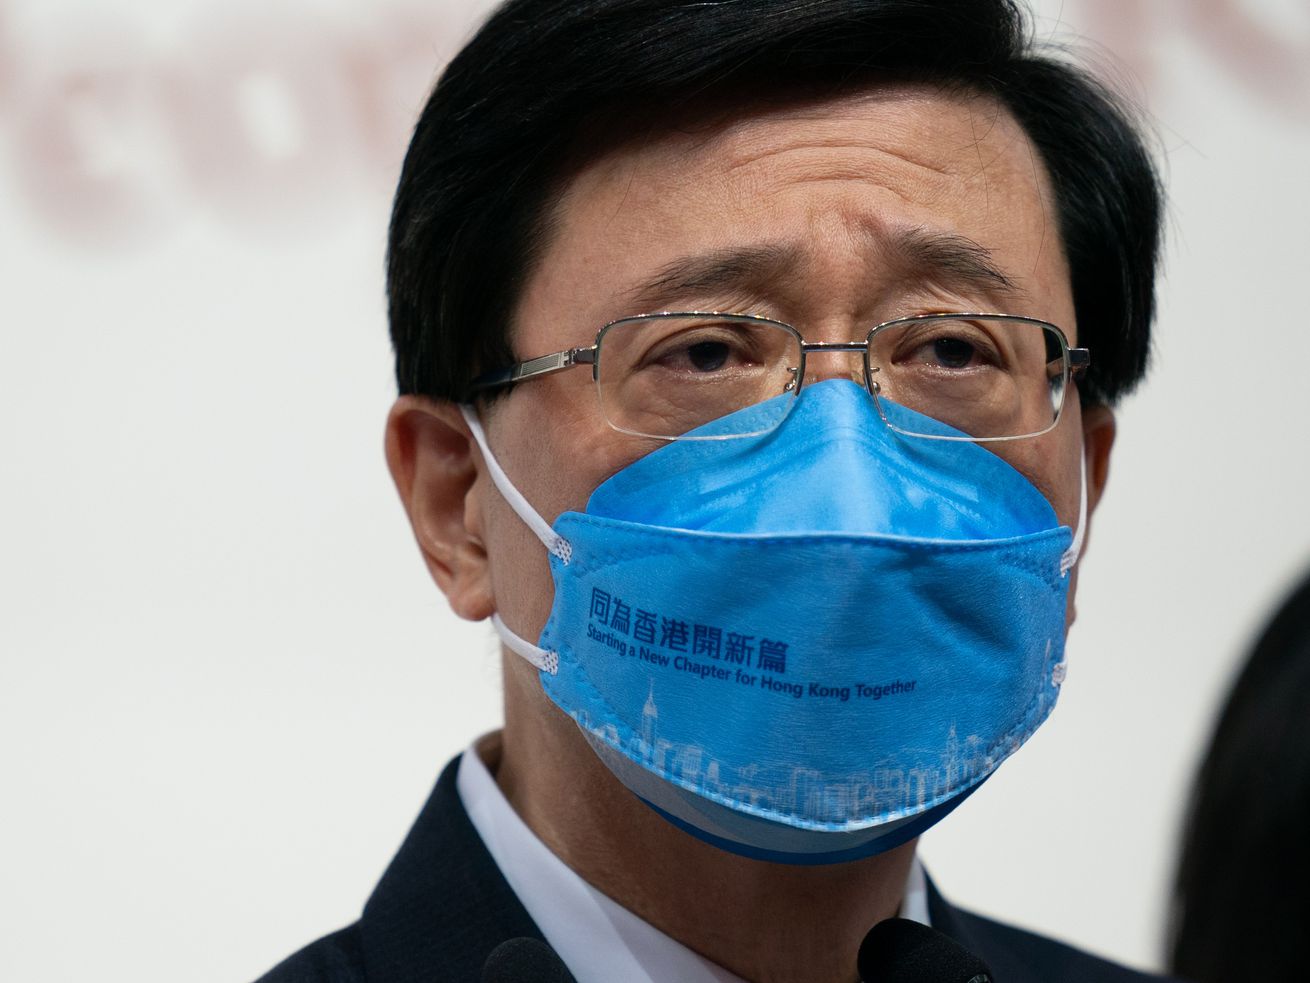 Hong Kong ushers in a new era of restriction under John Lee